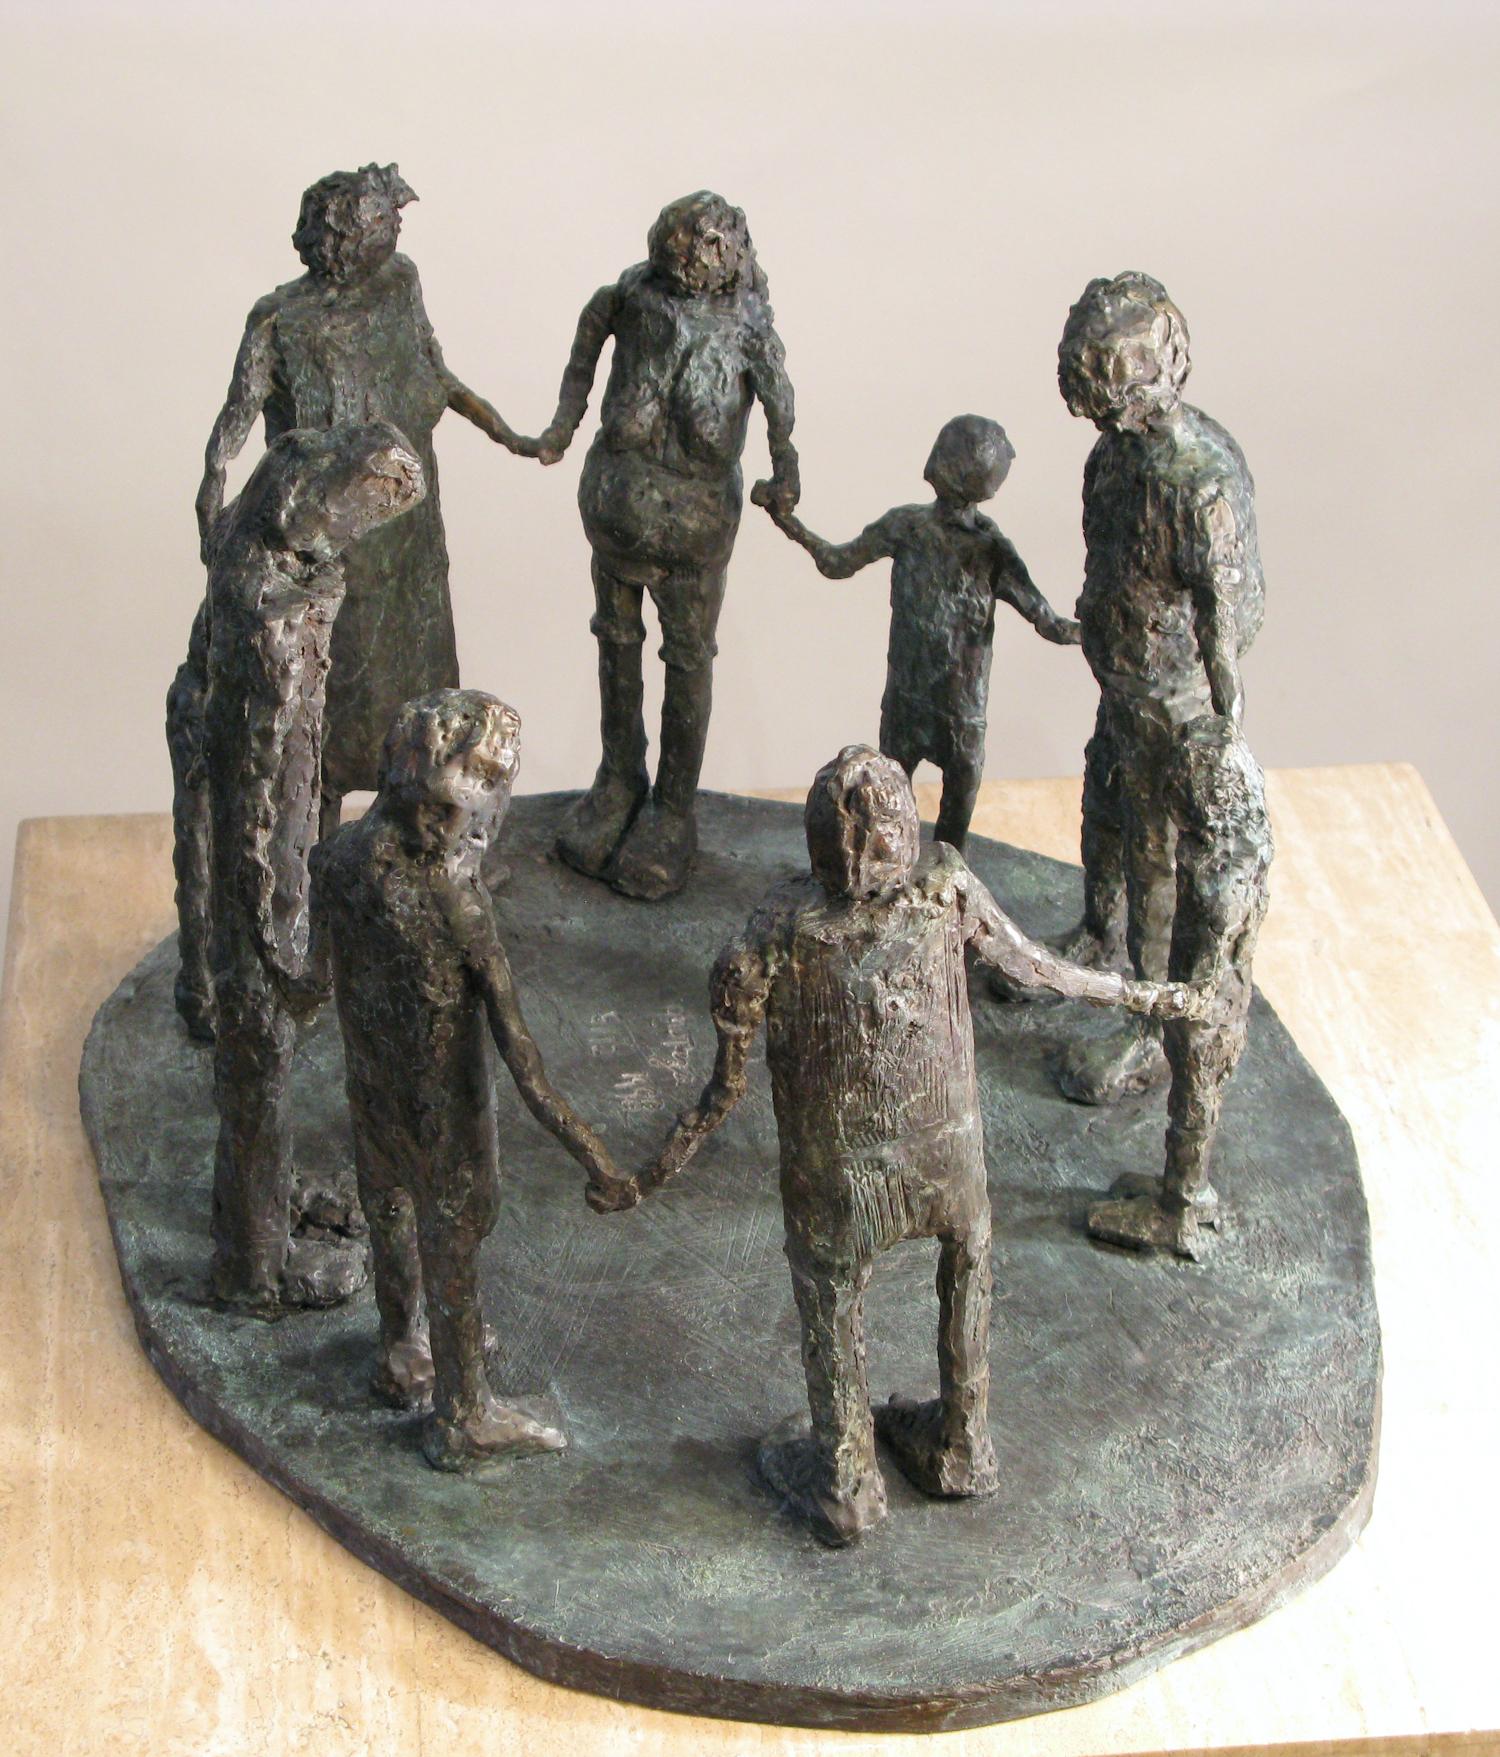 Circle of Friends Generations, bronze sculpture family friends - Sculpture by Eduardo Oropeza